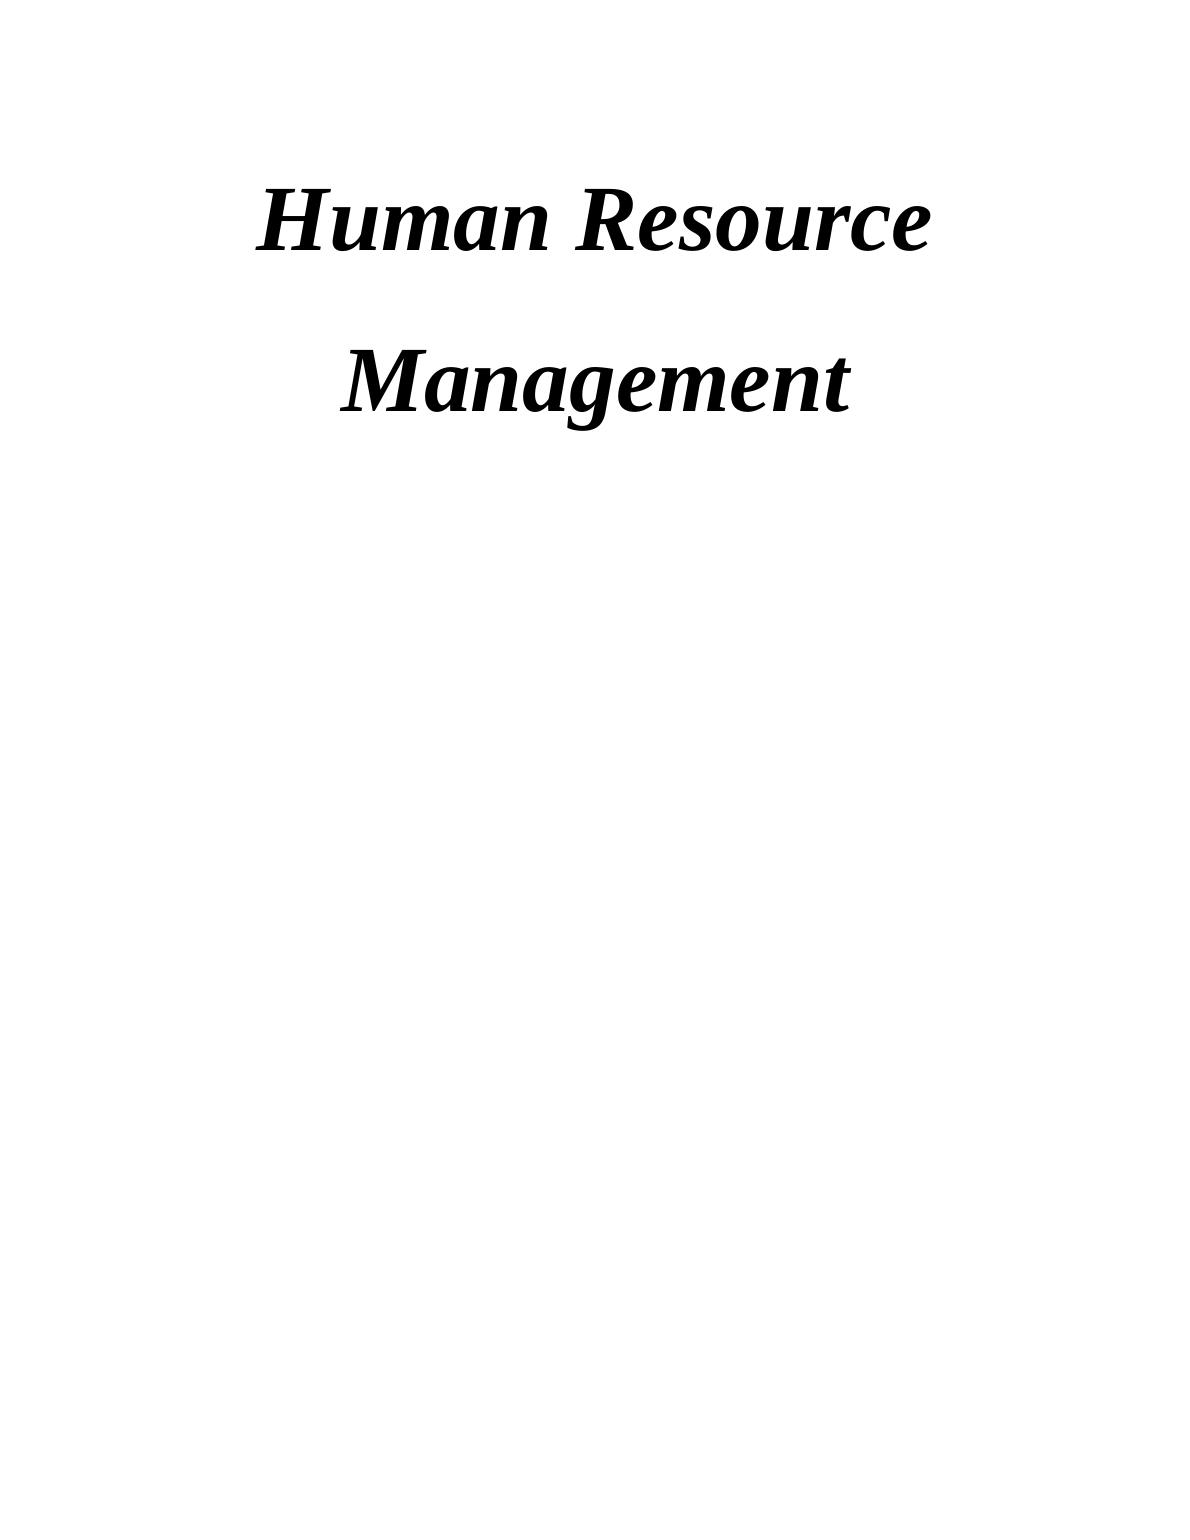 Human Resource Management & Organizational Structure_1